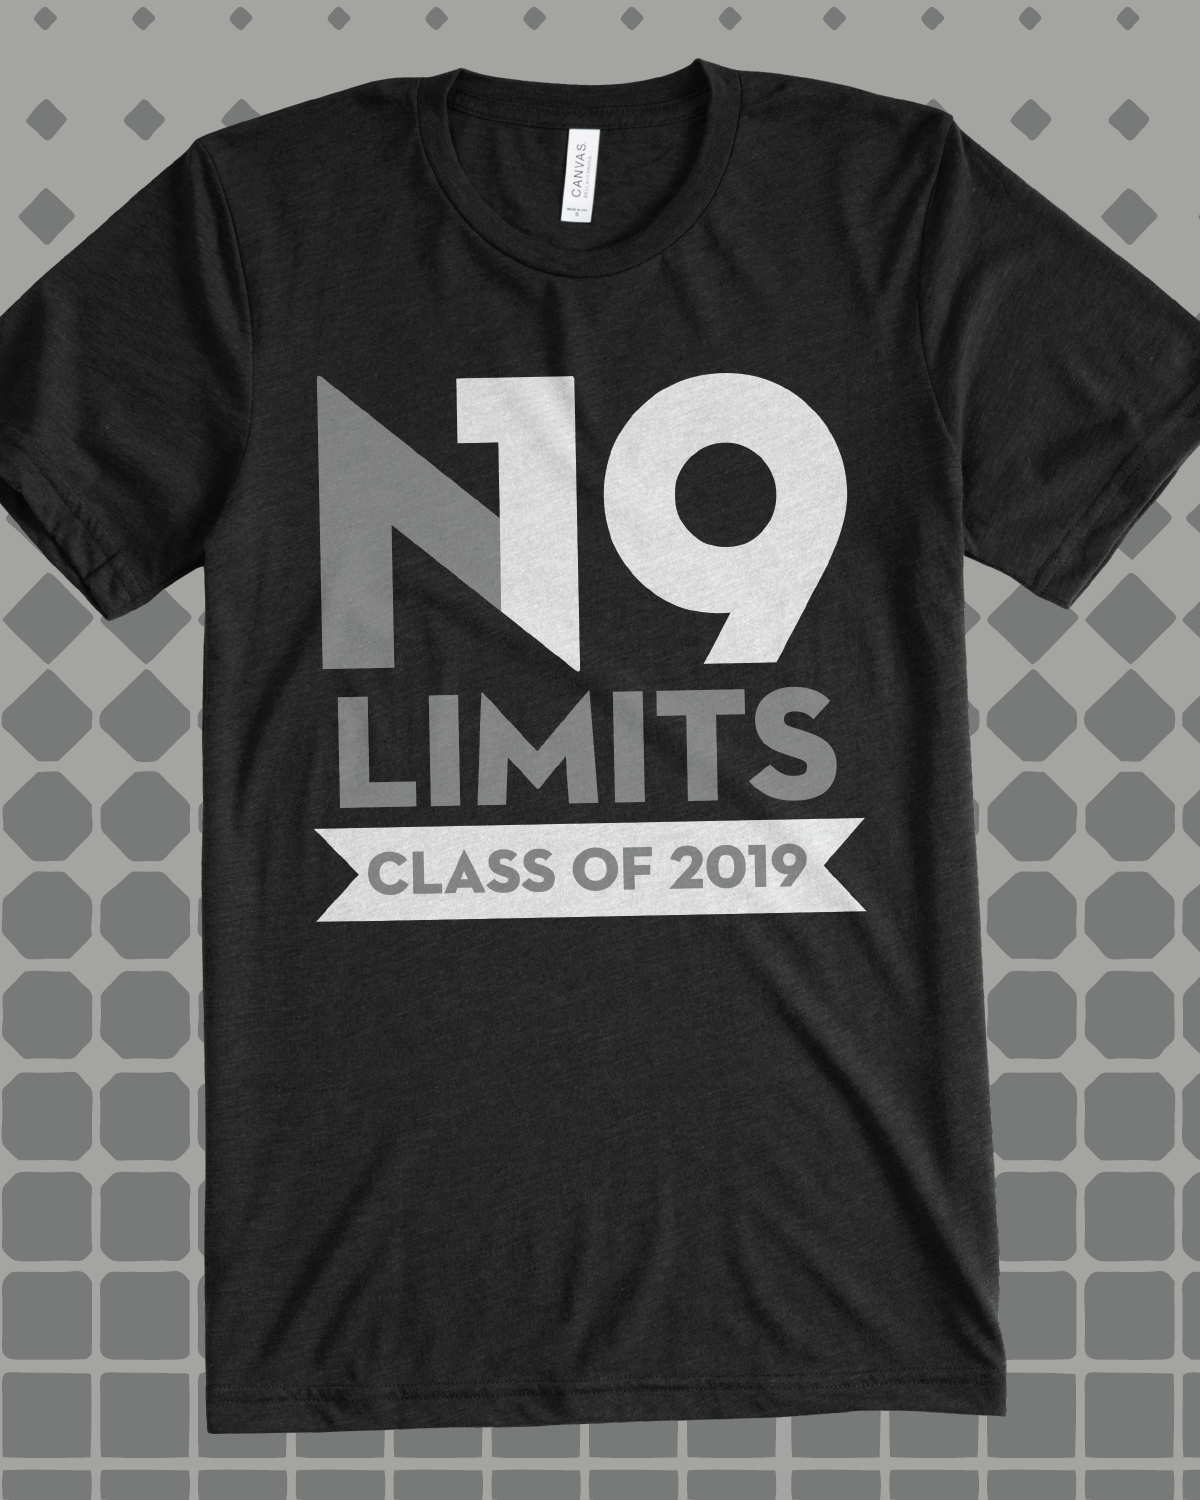 10 Gorgeous Homecoming T Shirt Design Ideas n19 limits class of 2019 class shirt design idea for custom shirt 7 2022